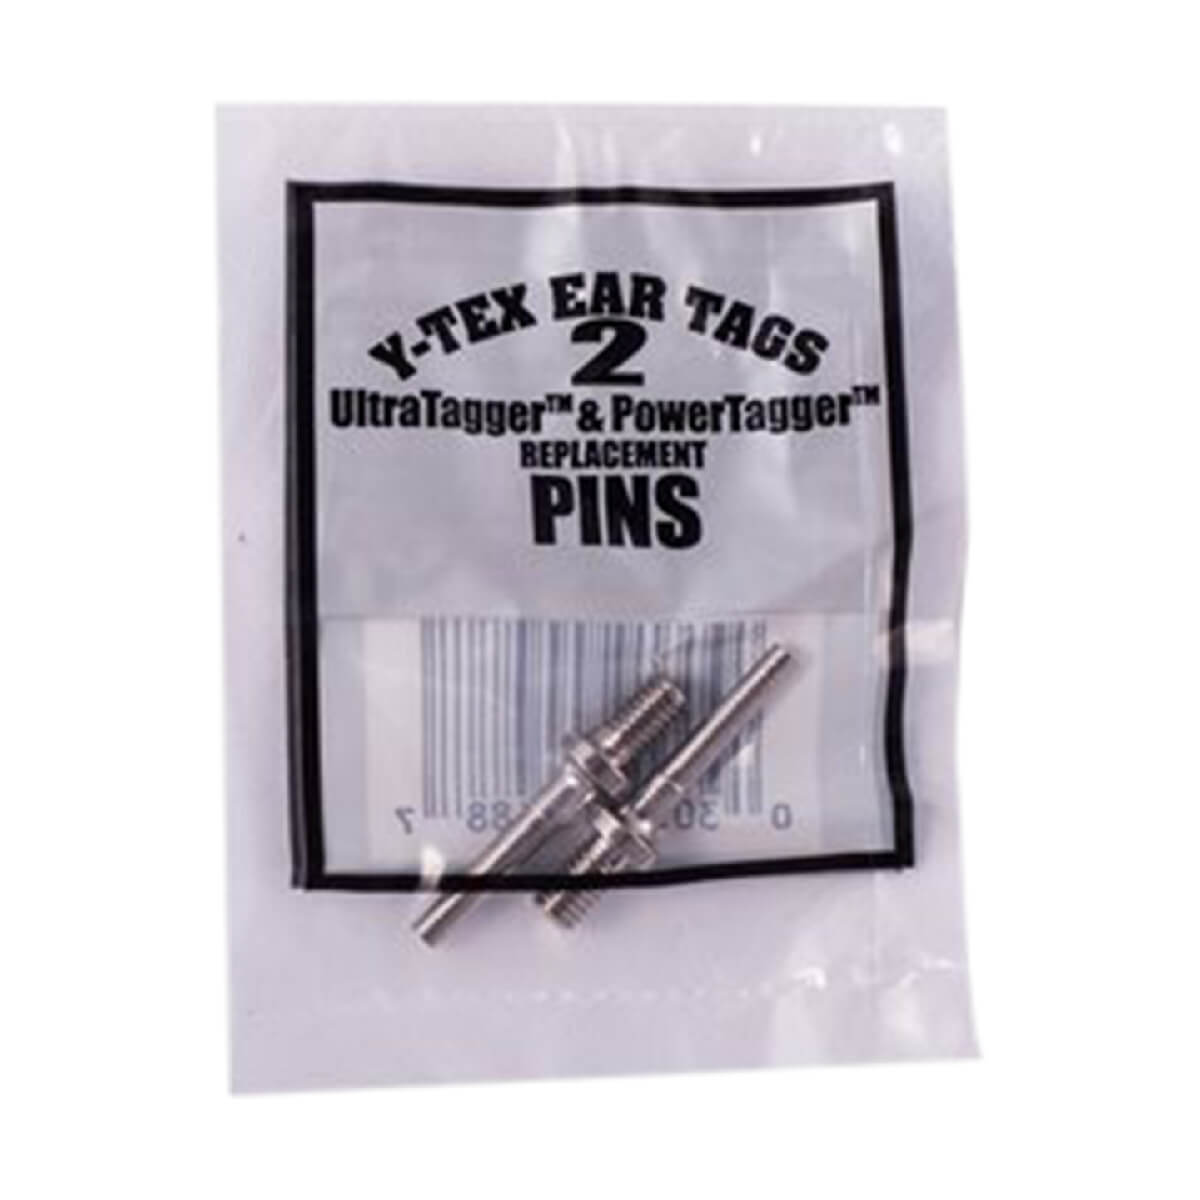 Ultra Tagger Pins